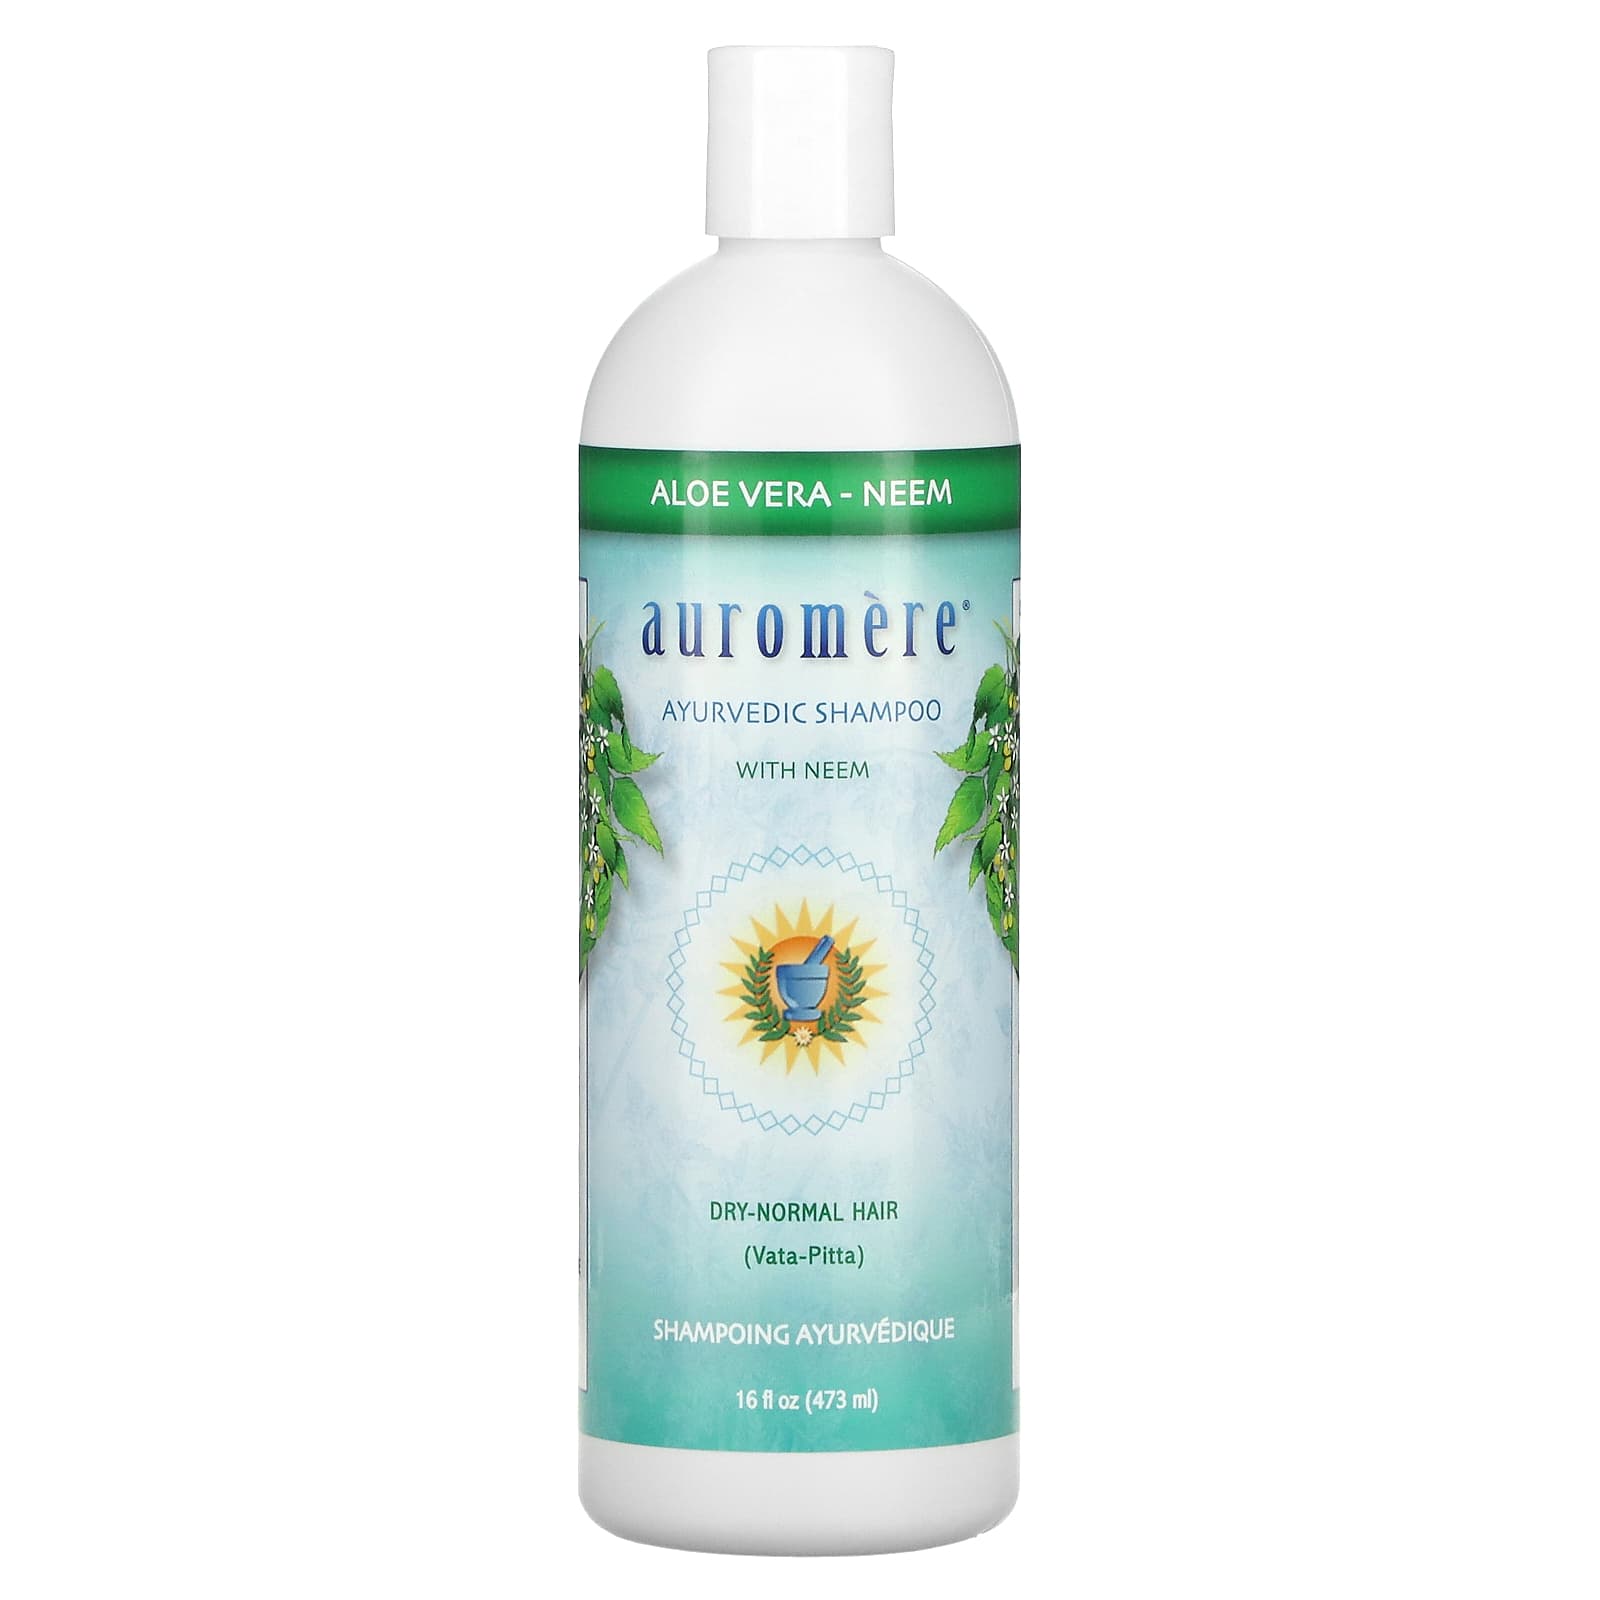 støj succes indebære Auromere, Ayurvedic Shampoo with Neem, Aloe Vera, 16 fl oz (473 ml)